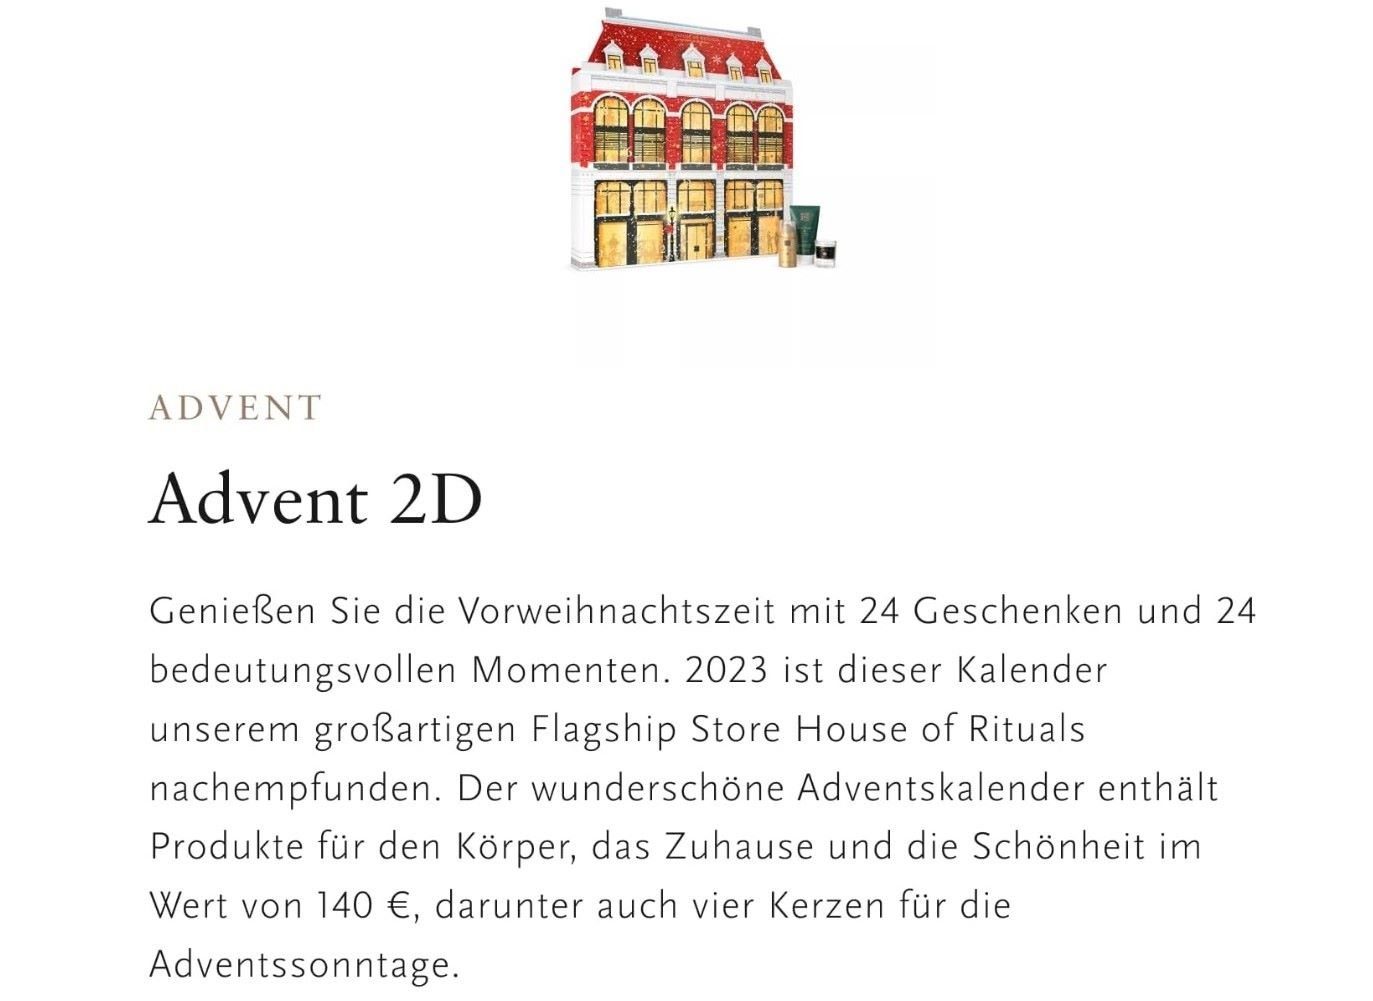 Rituals of Advent (24-tlg) Ritual Adventskalender The Adventskalender 2023